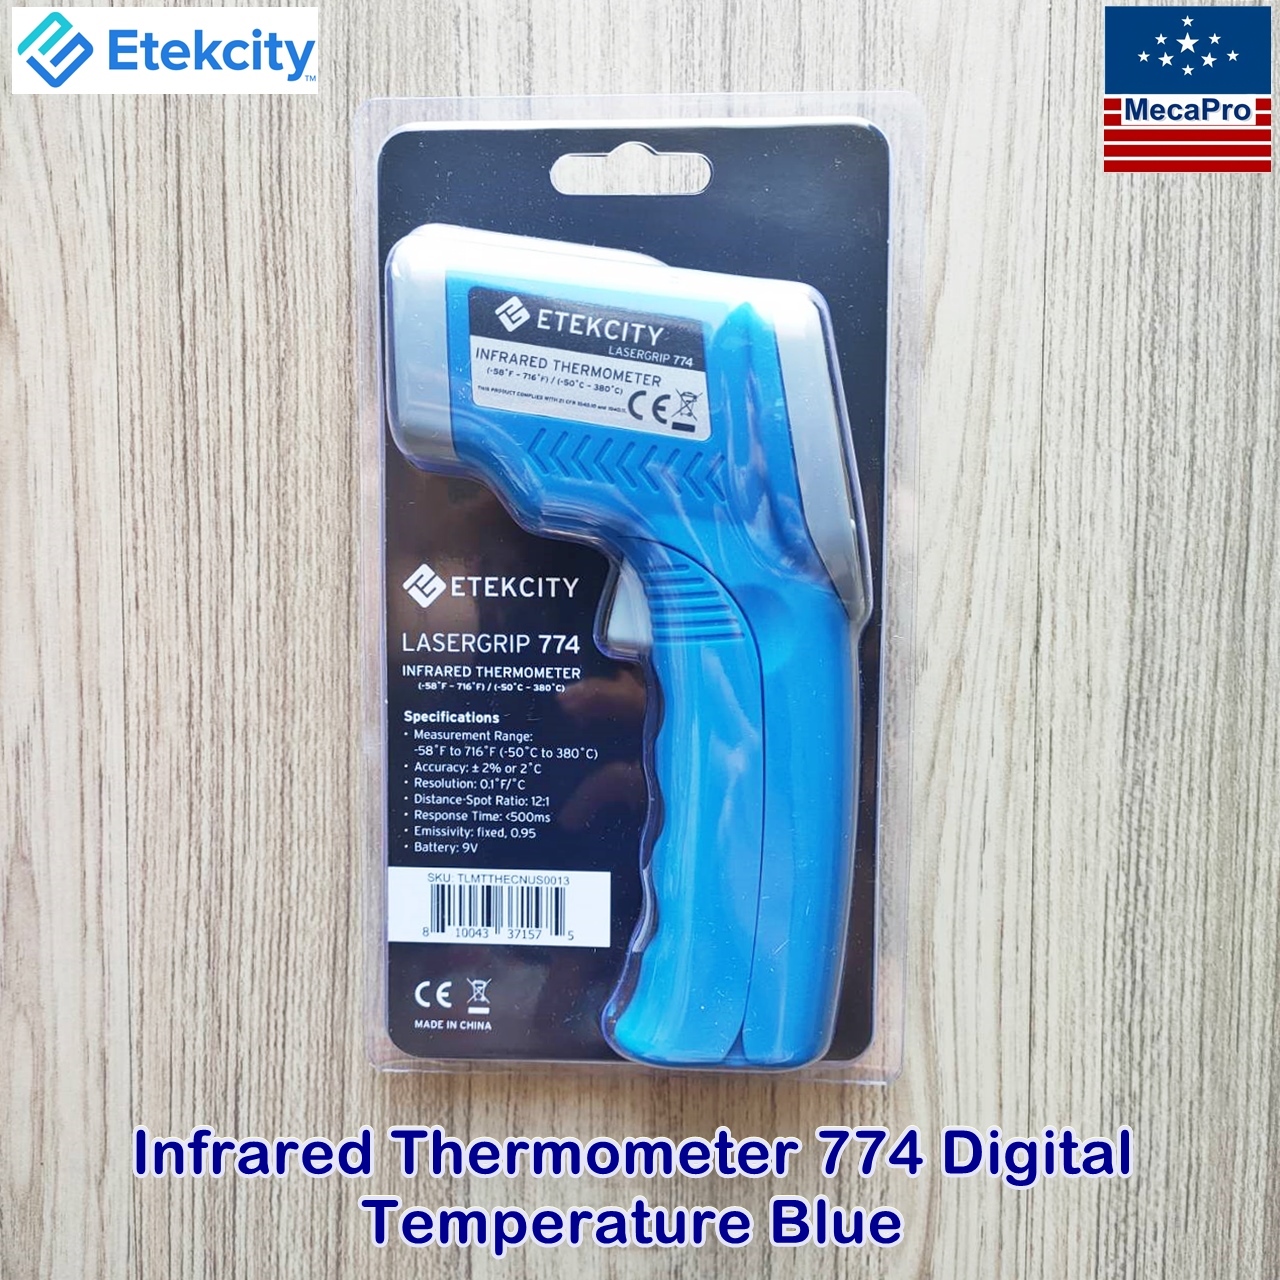 Etekcity Lasergrip 774: Infrared Thermometer - VeSync Store